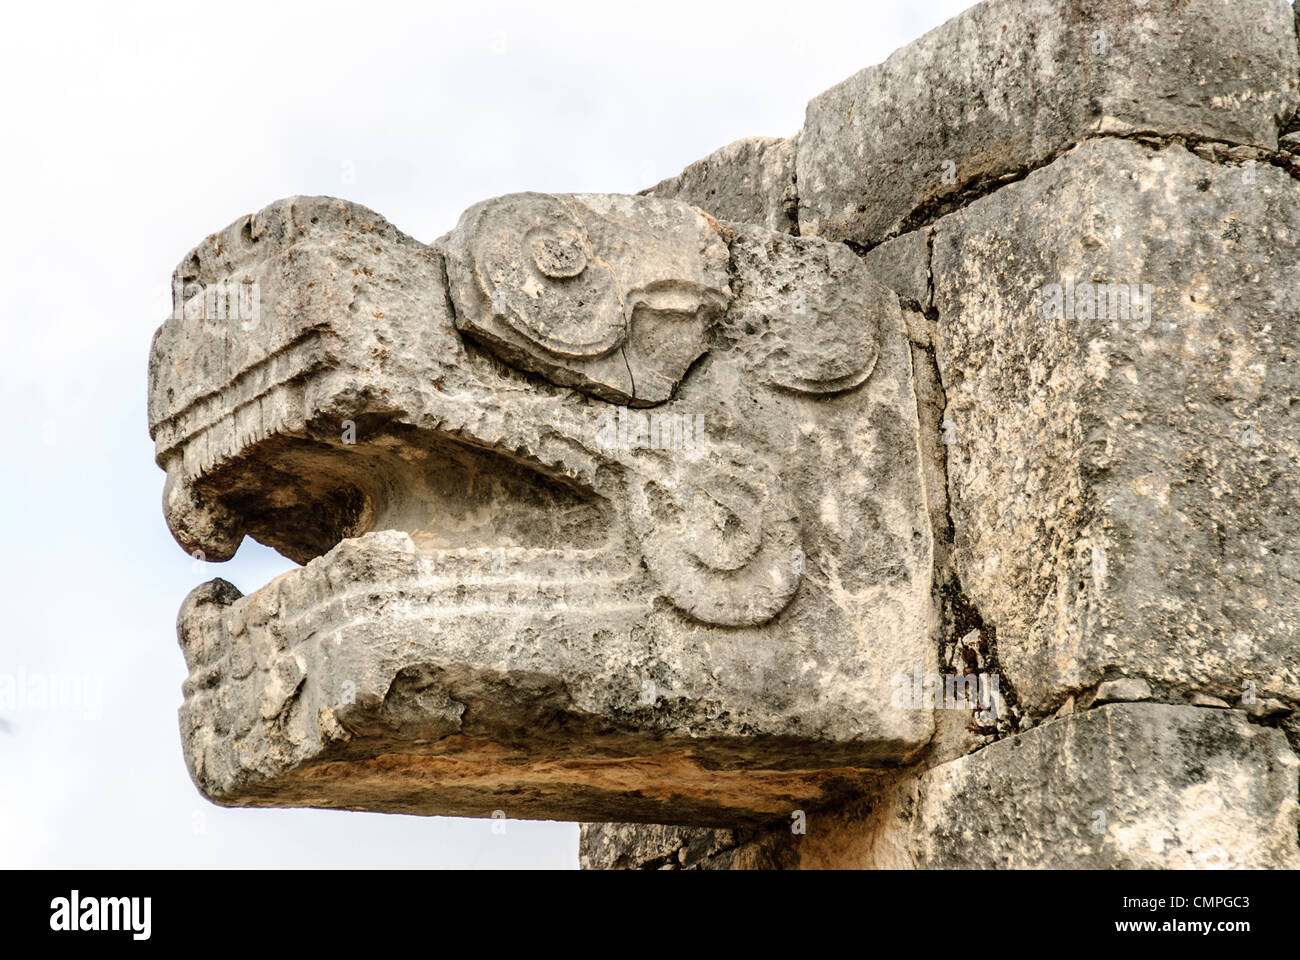 CHICHEN ITZA, Mexico - Carved stone jaguar heads adorning the buildings at Chichen Itza, Mexico. Stock Photo